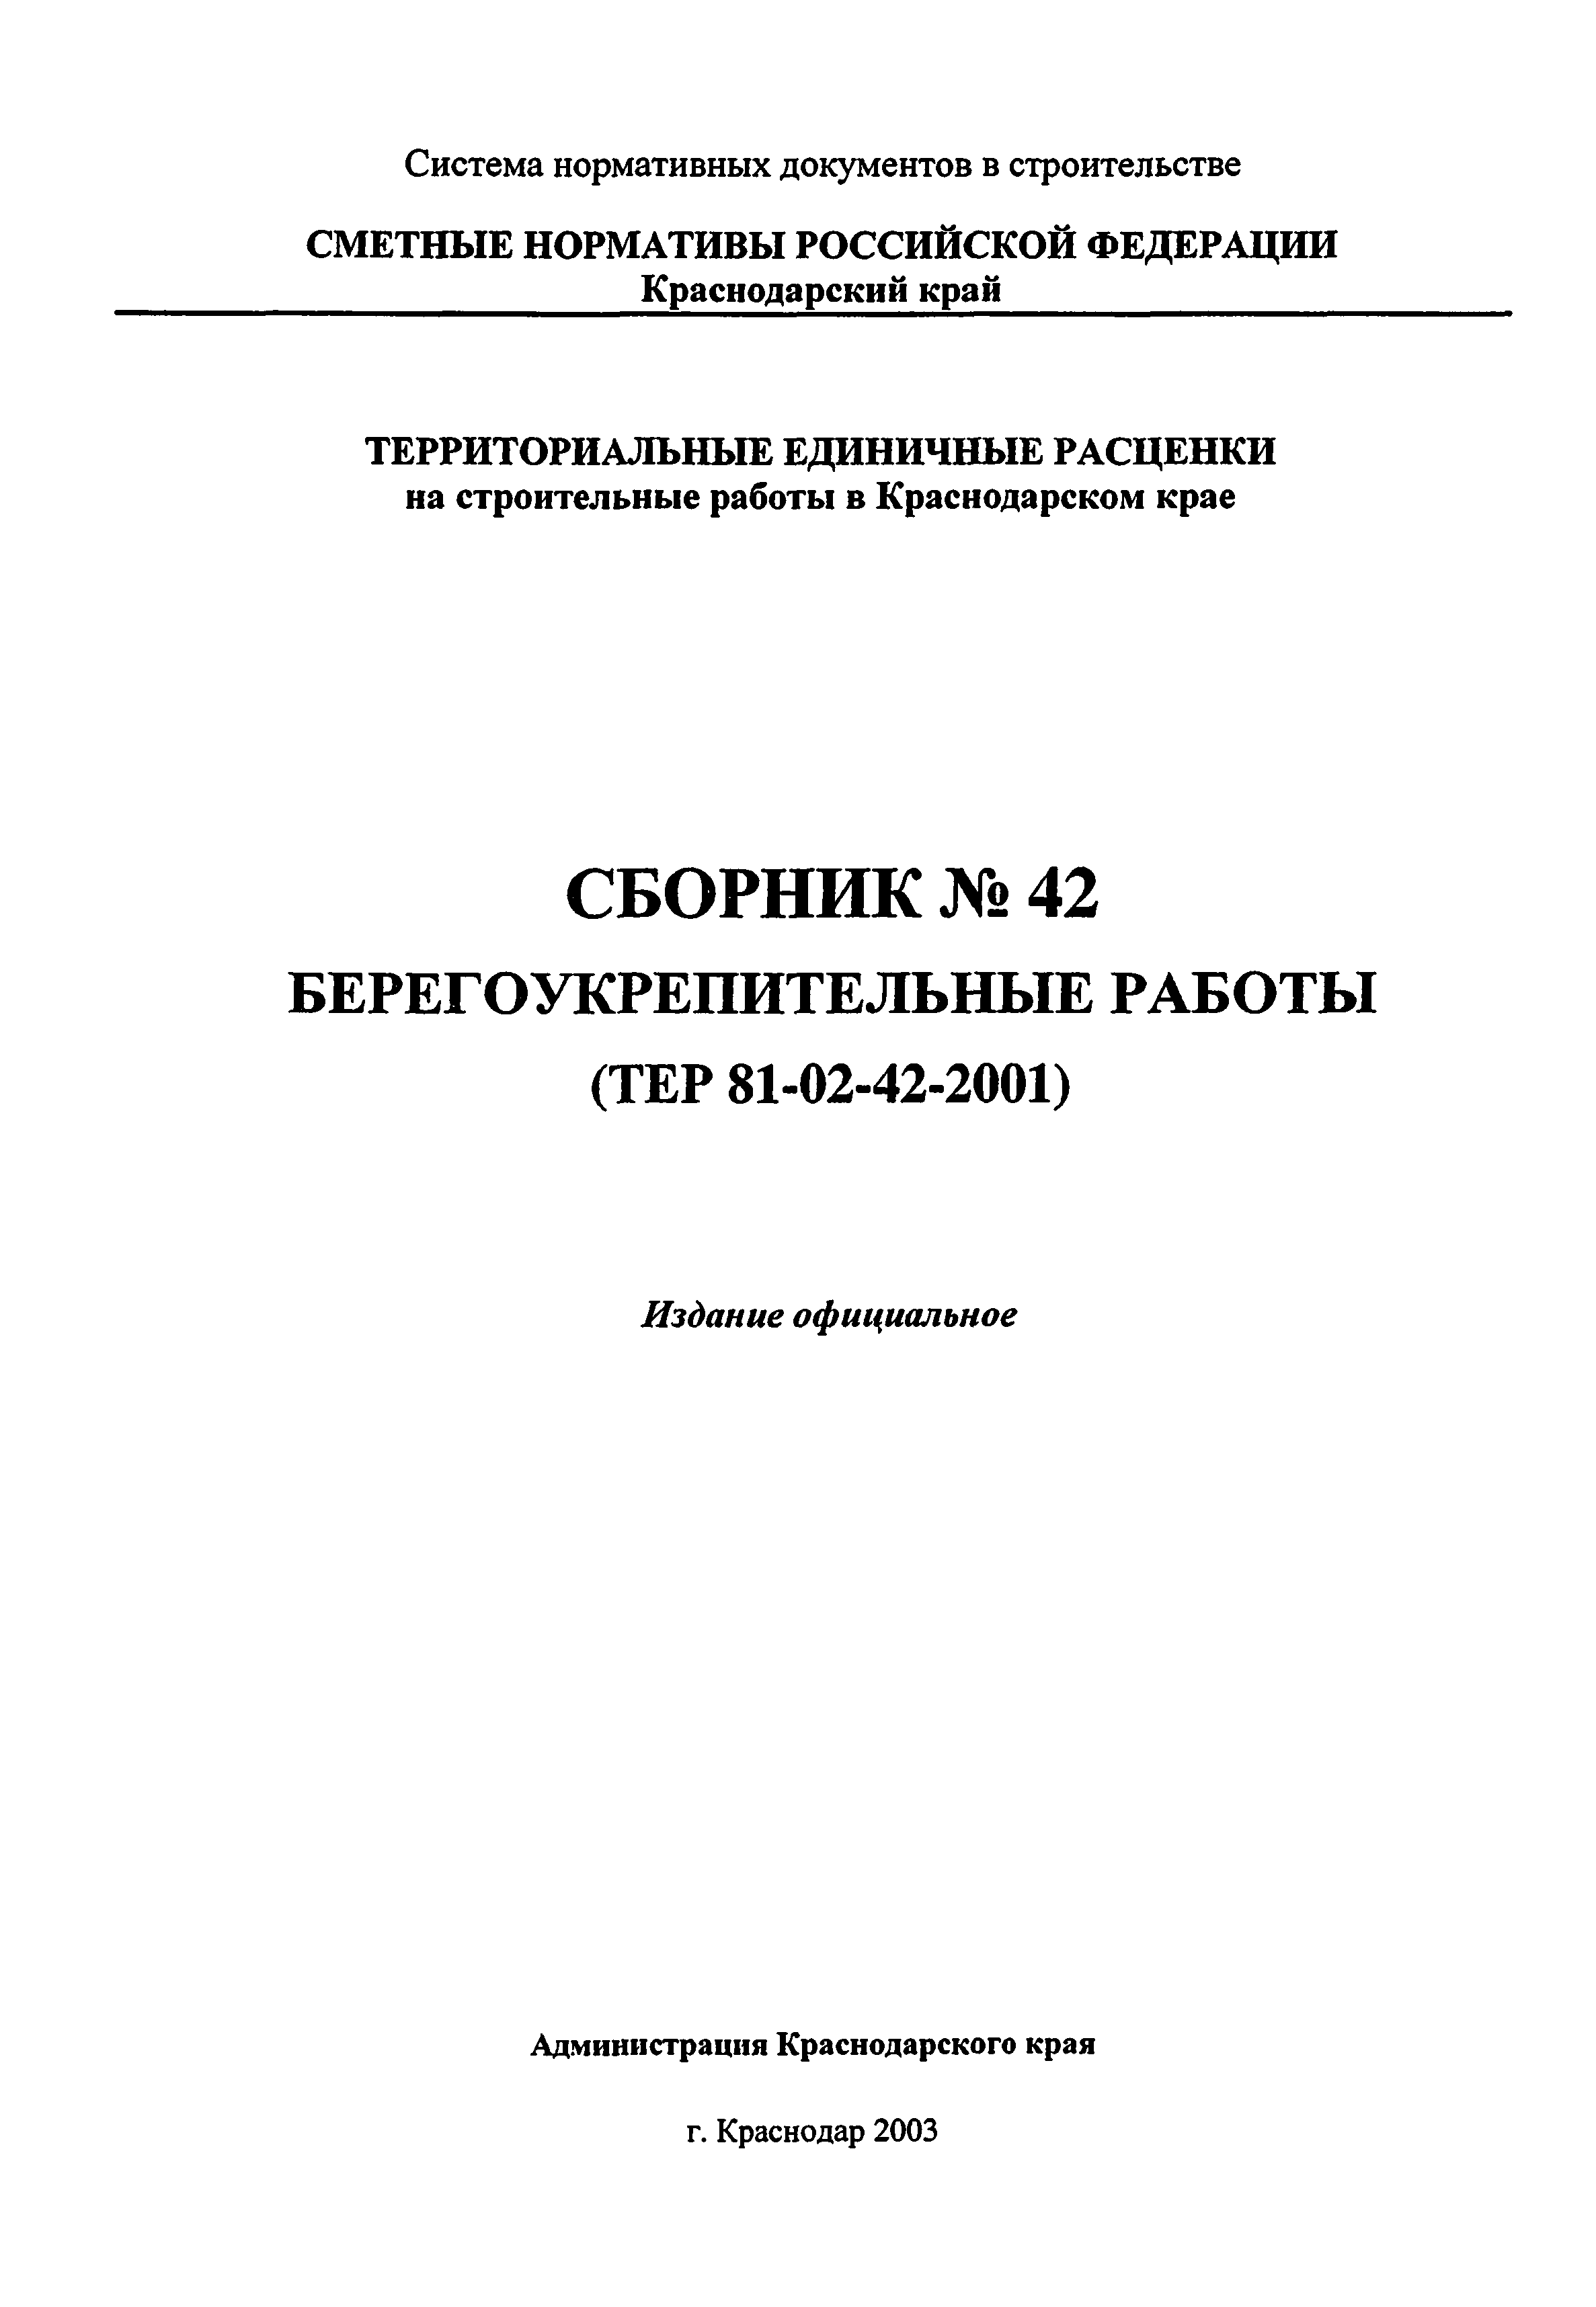 ТЕР Краснодарский край 2001-42